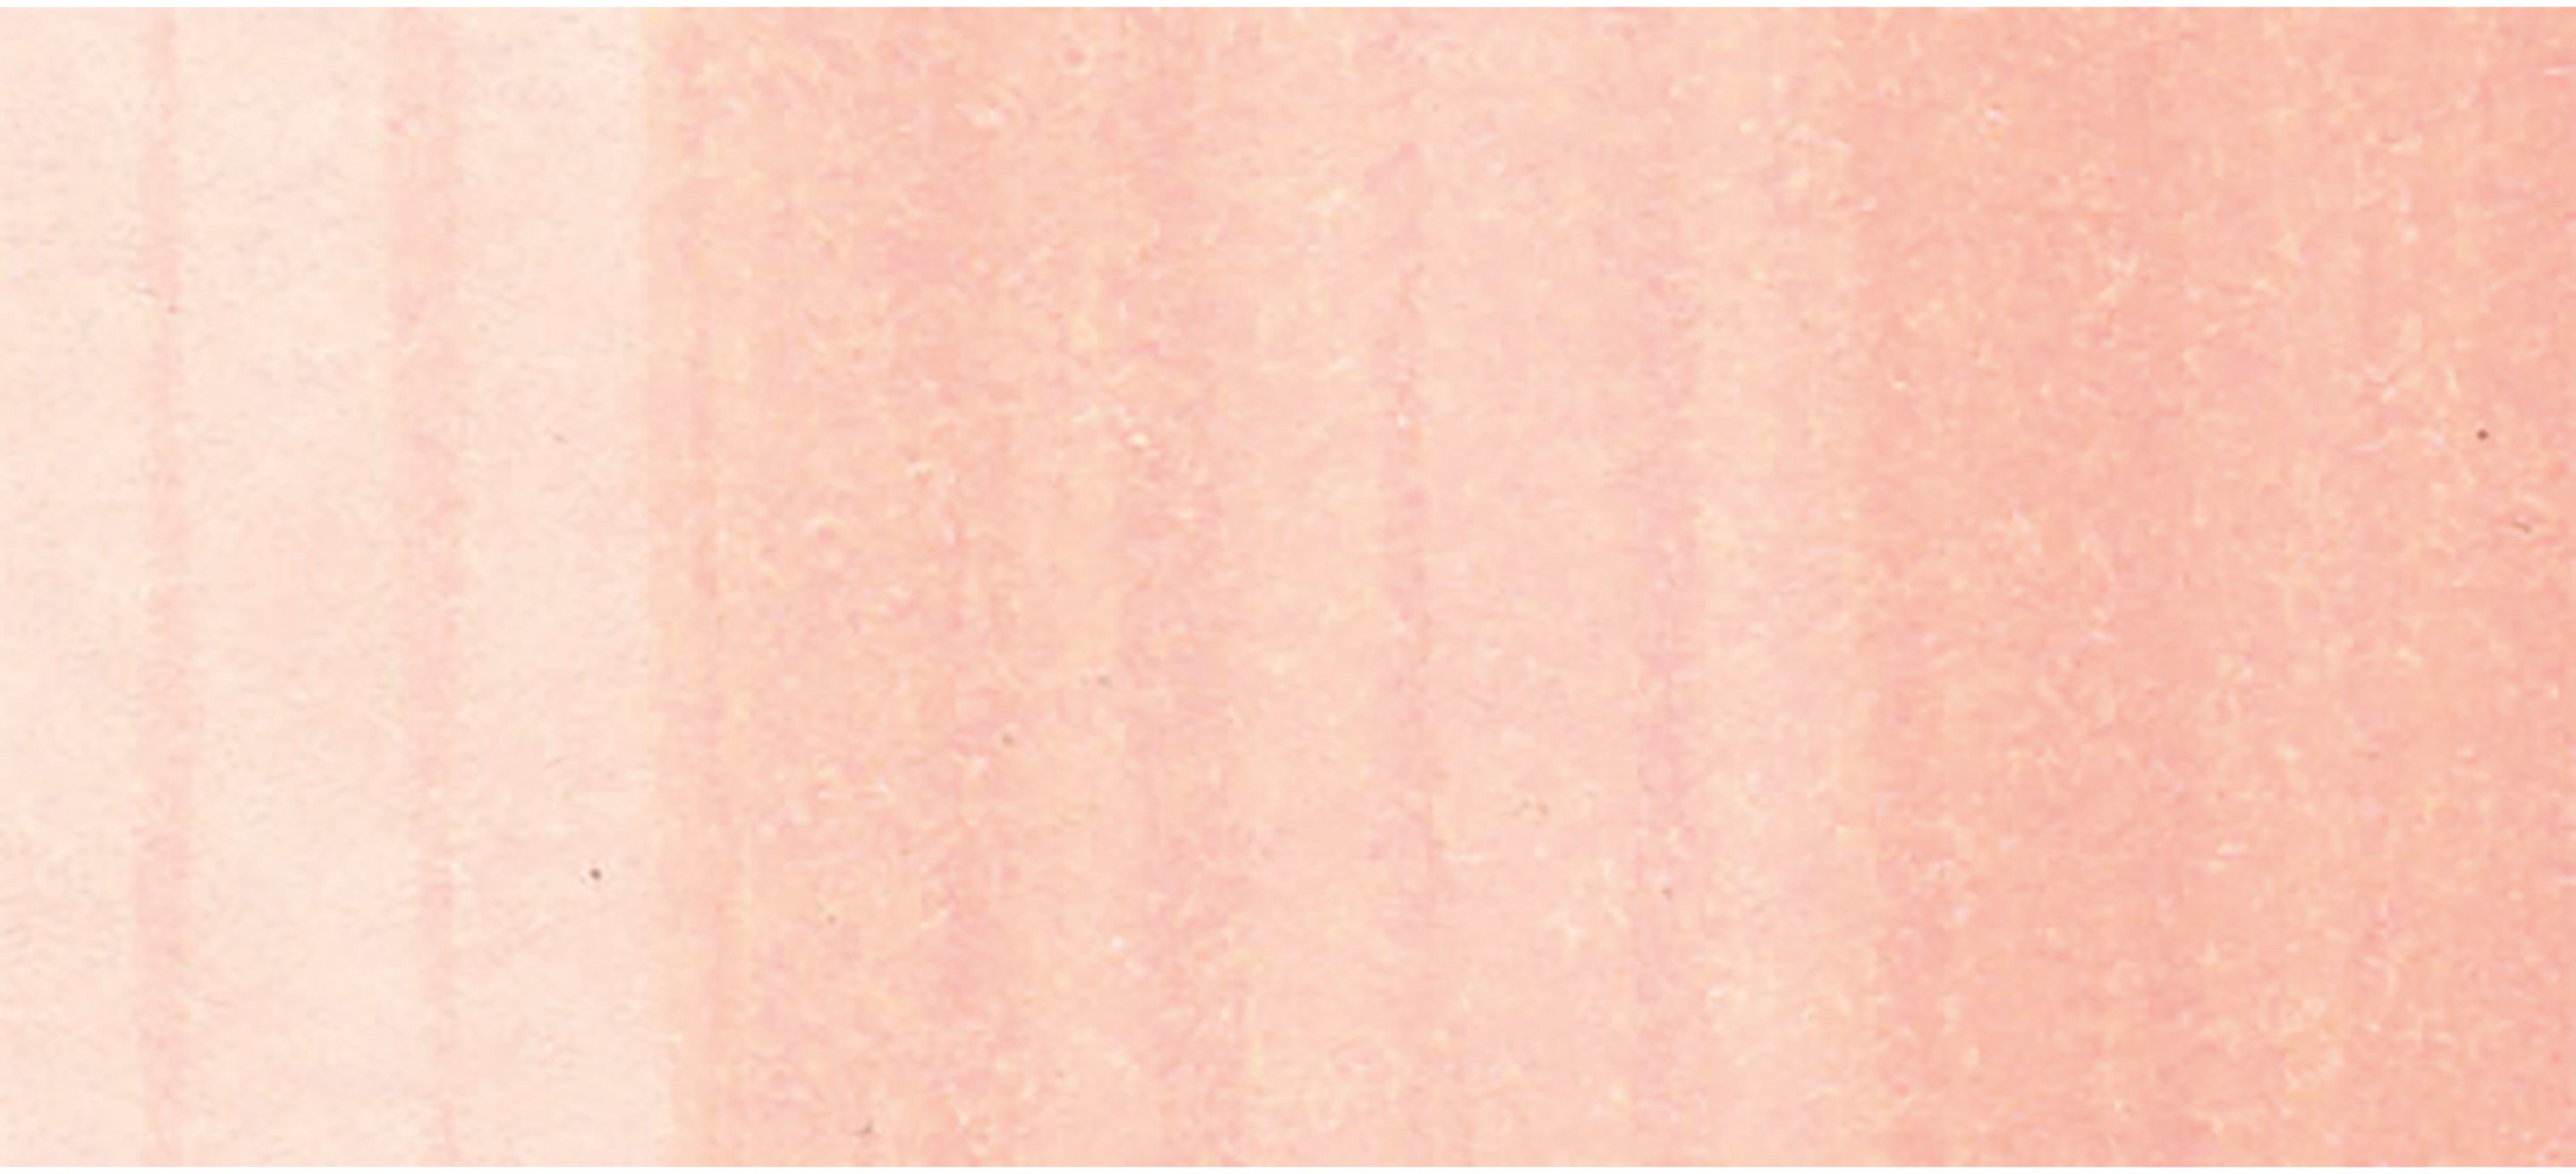 COPIC Marker Sketch 21075262 RV42 - Salmon Pink